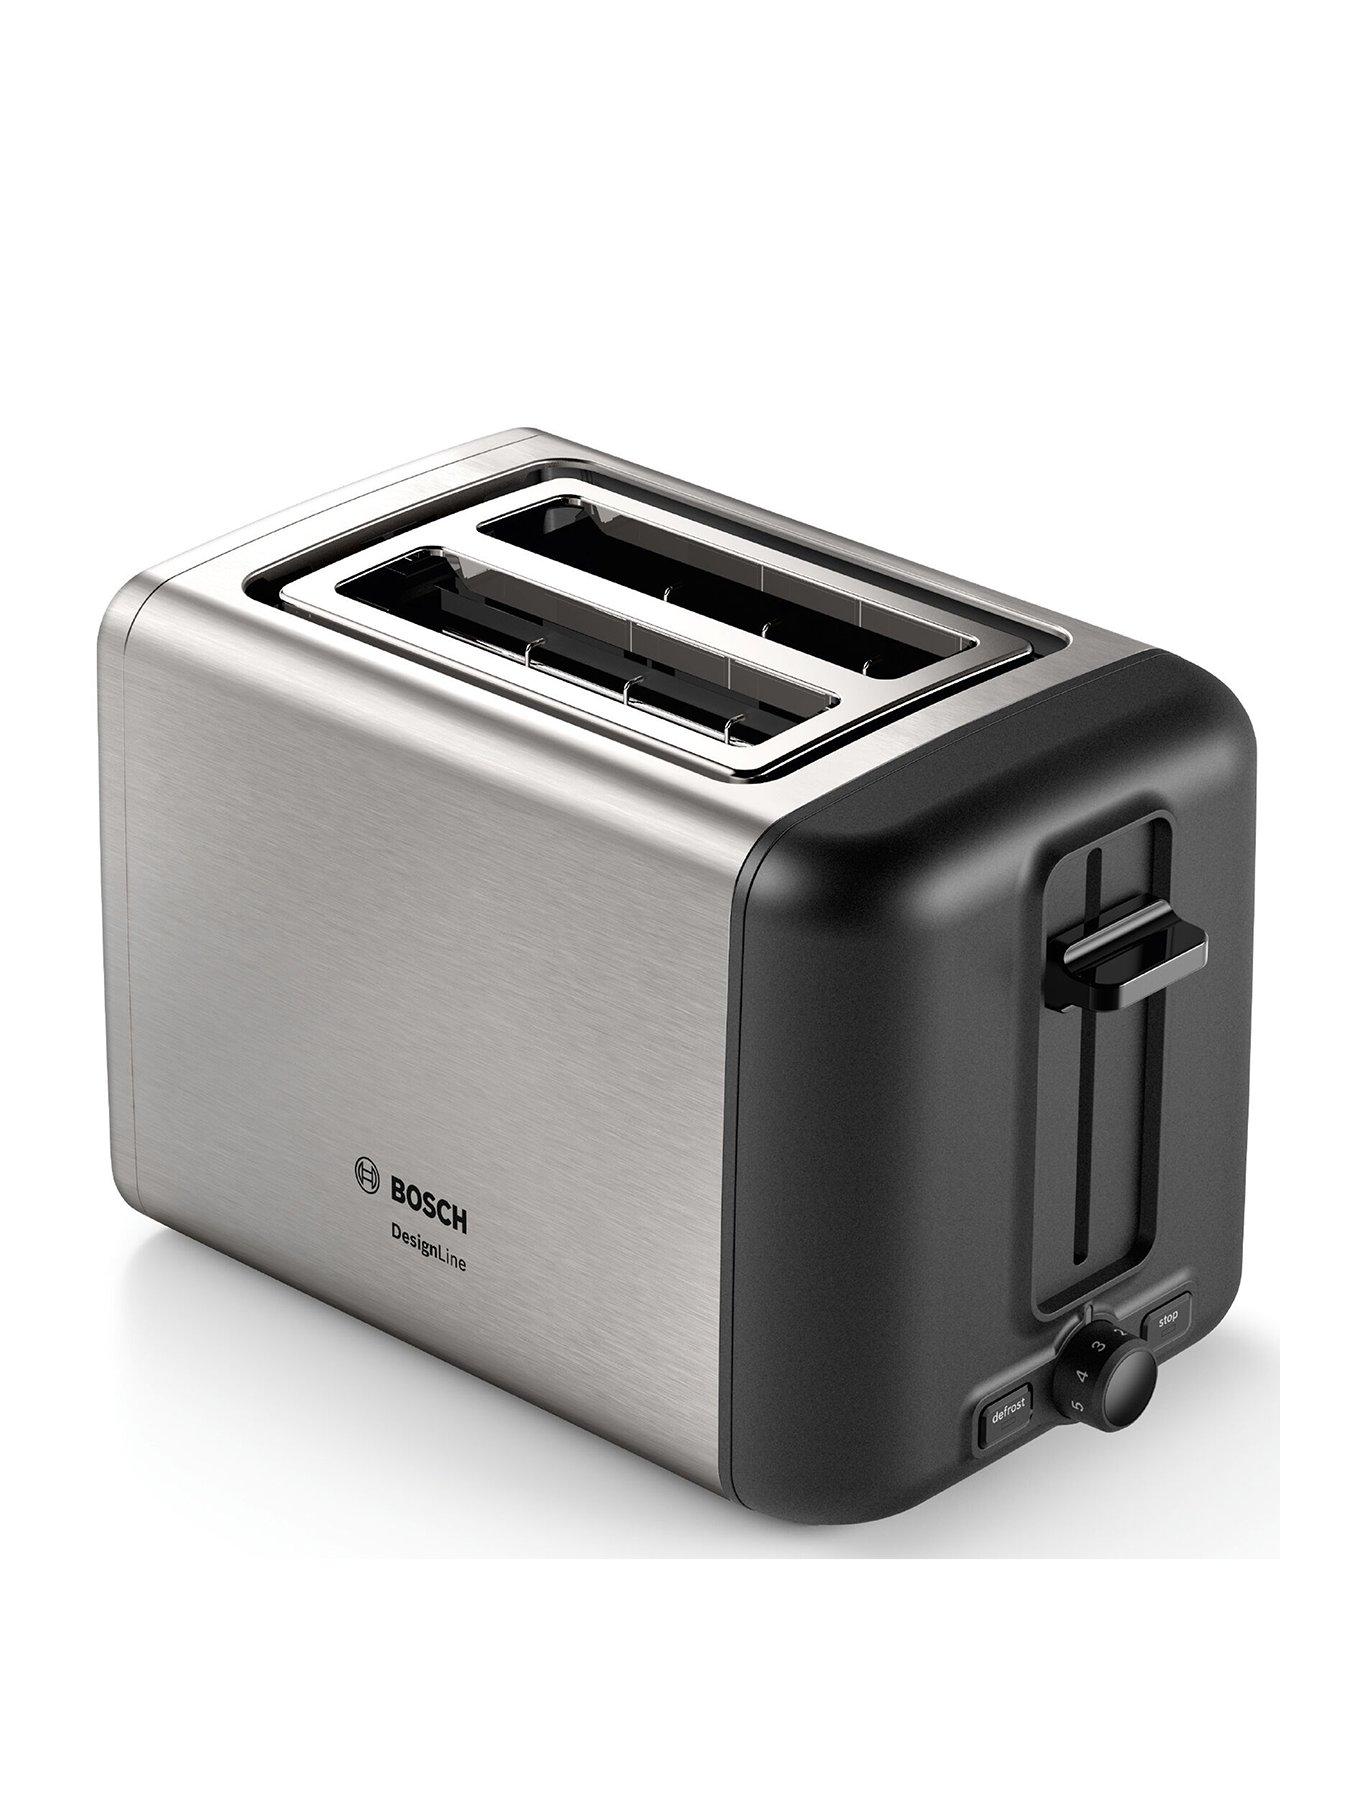 https://media.very.co.uk/i/very/VKNYM_SQ1_0000000099_N_A_SLf/bosch-design-line-toaster-stainless.jpg?$180x240_retinamobilex2$